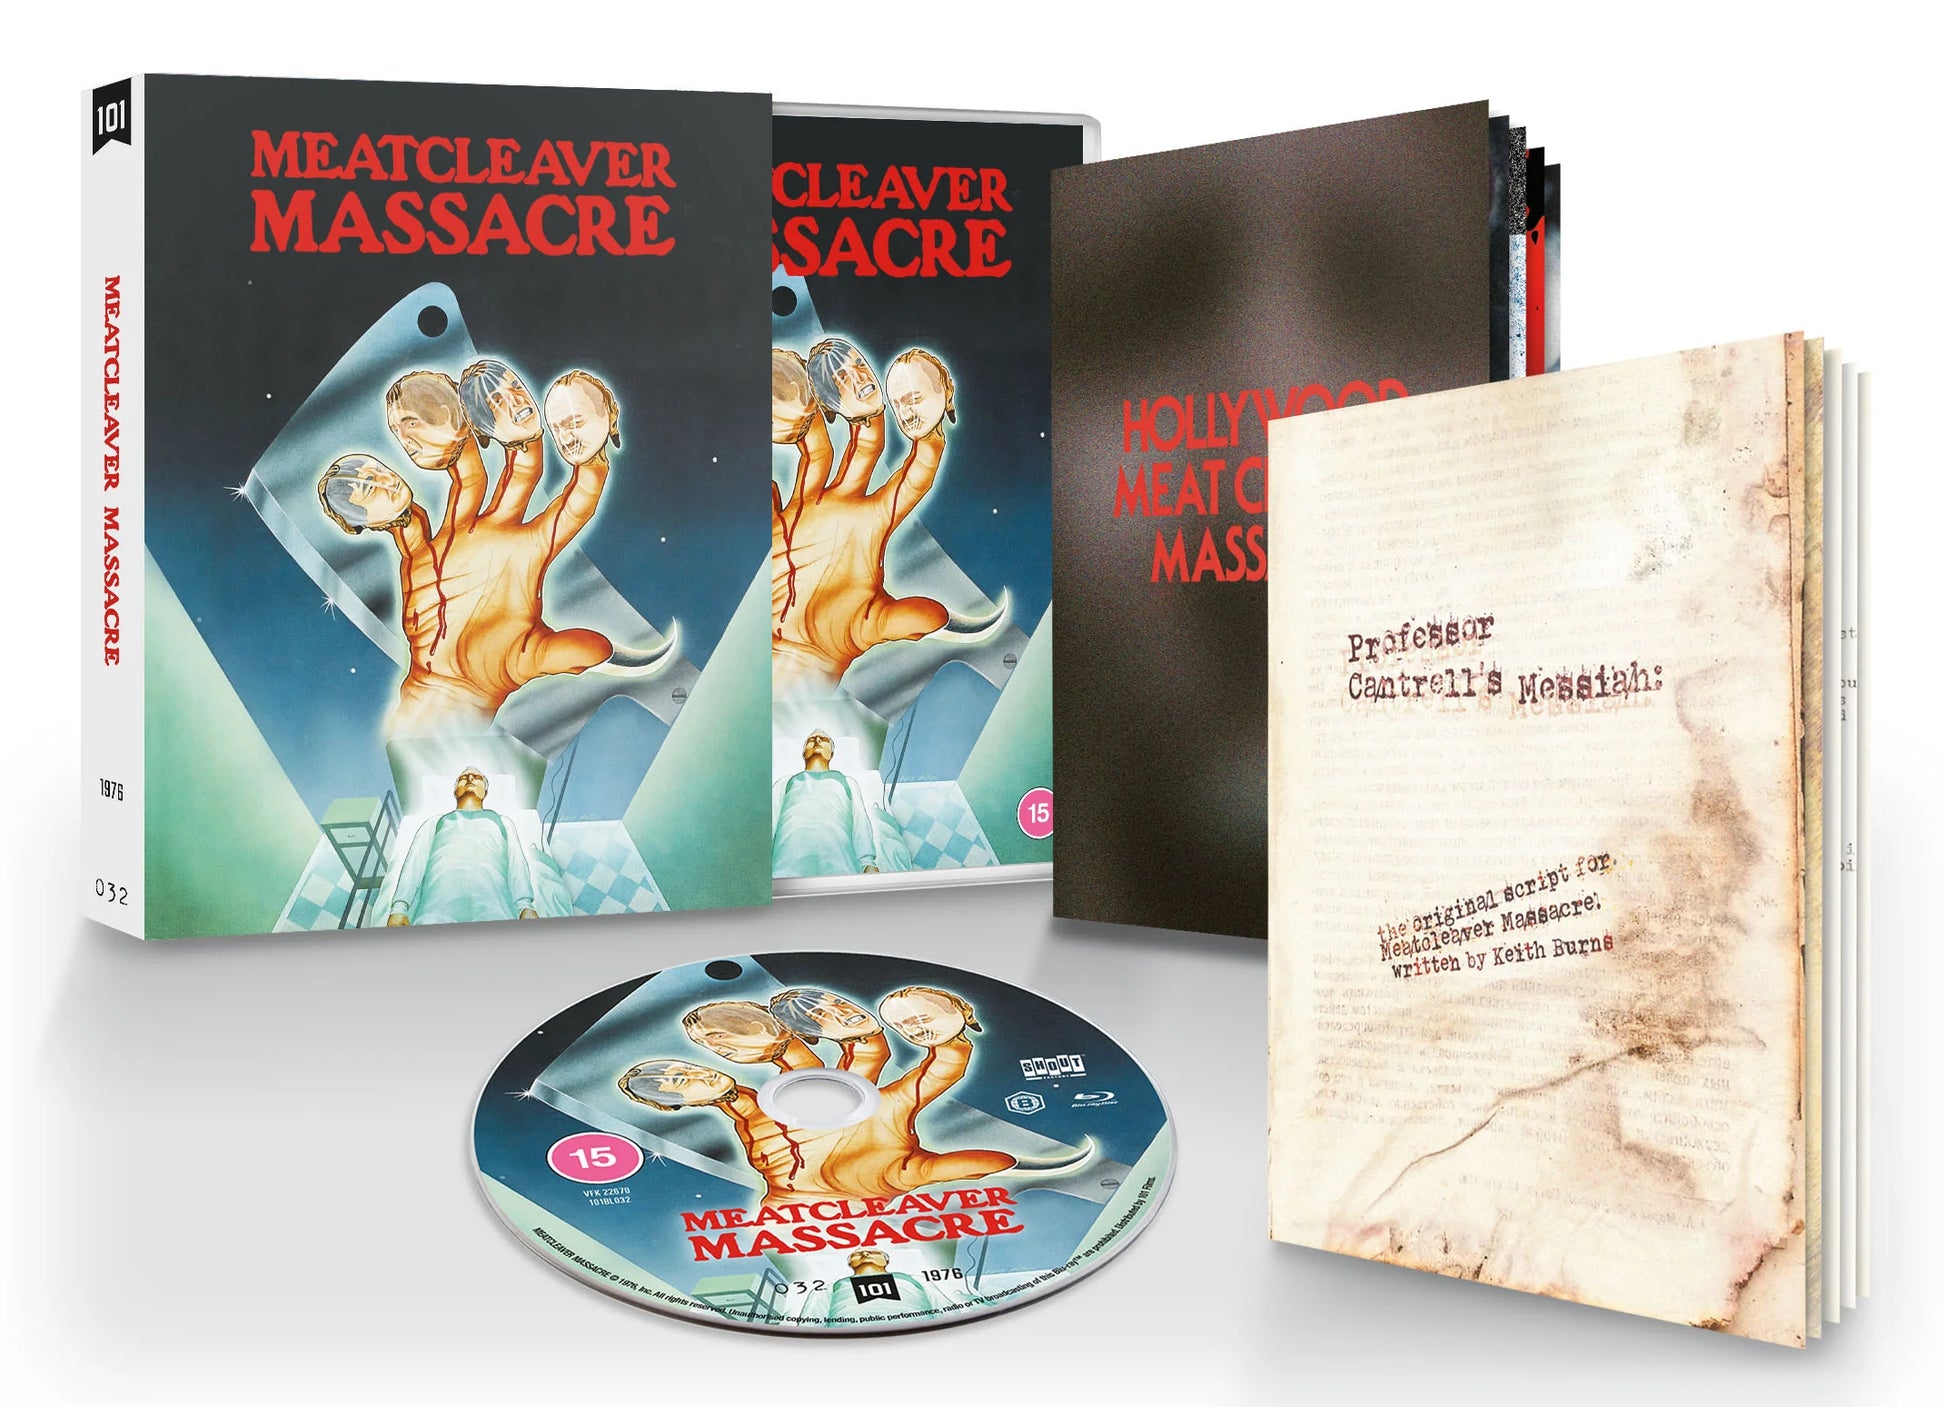 Meatcleaver Massacre (1976) Blu-ray Limited Edition (101 Films UK